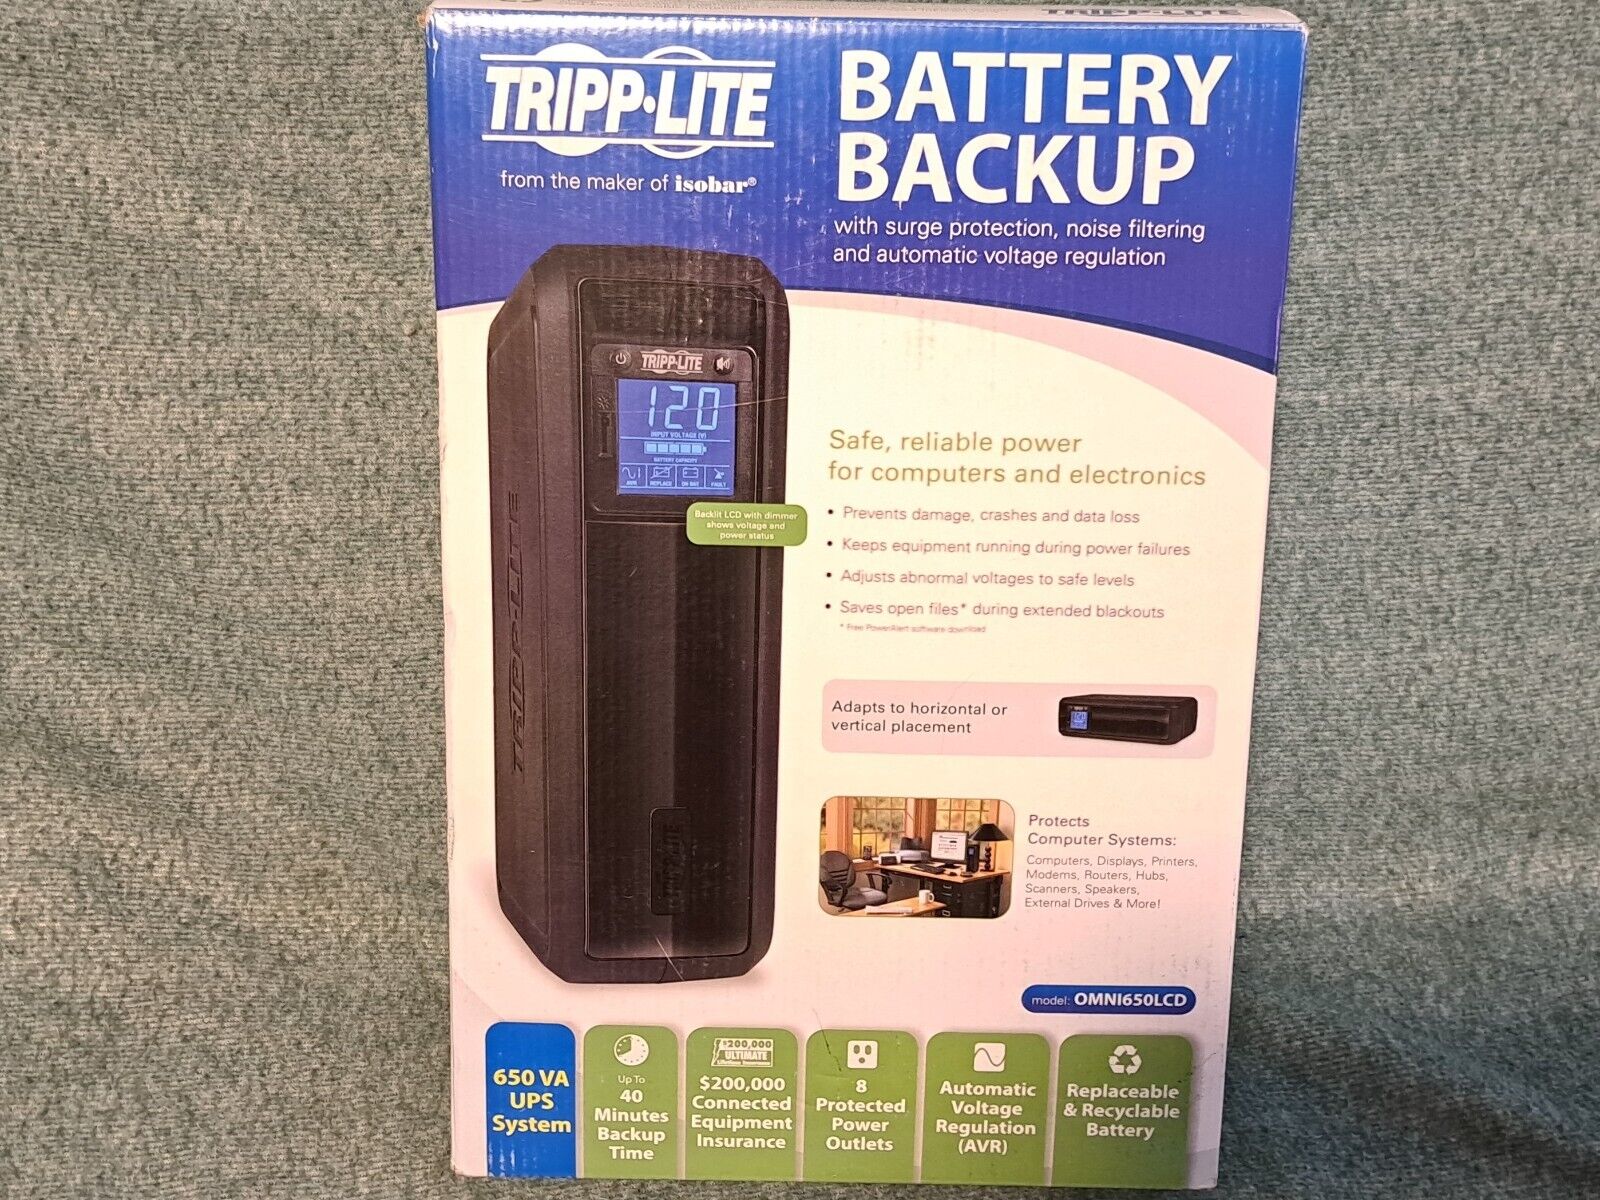 Tripp-Lite Battery Backup OMNI650LCD 650 VA UPS System